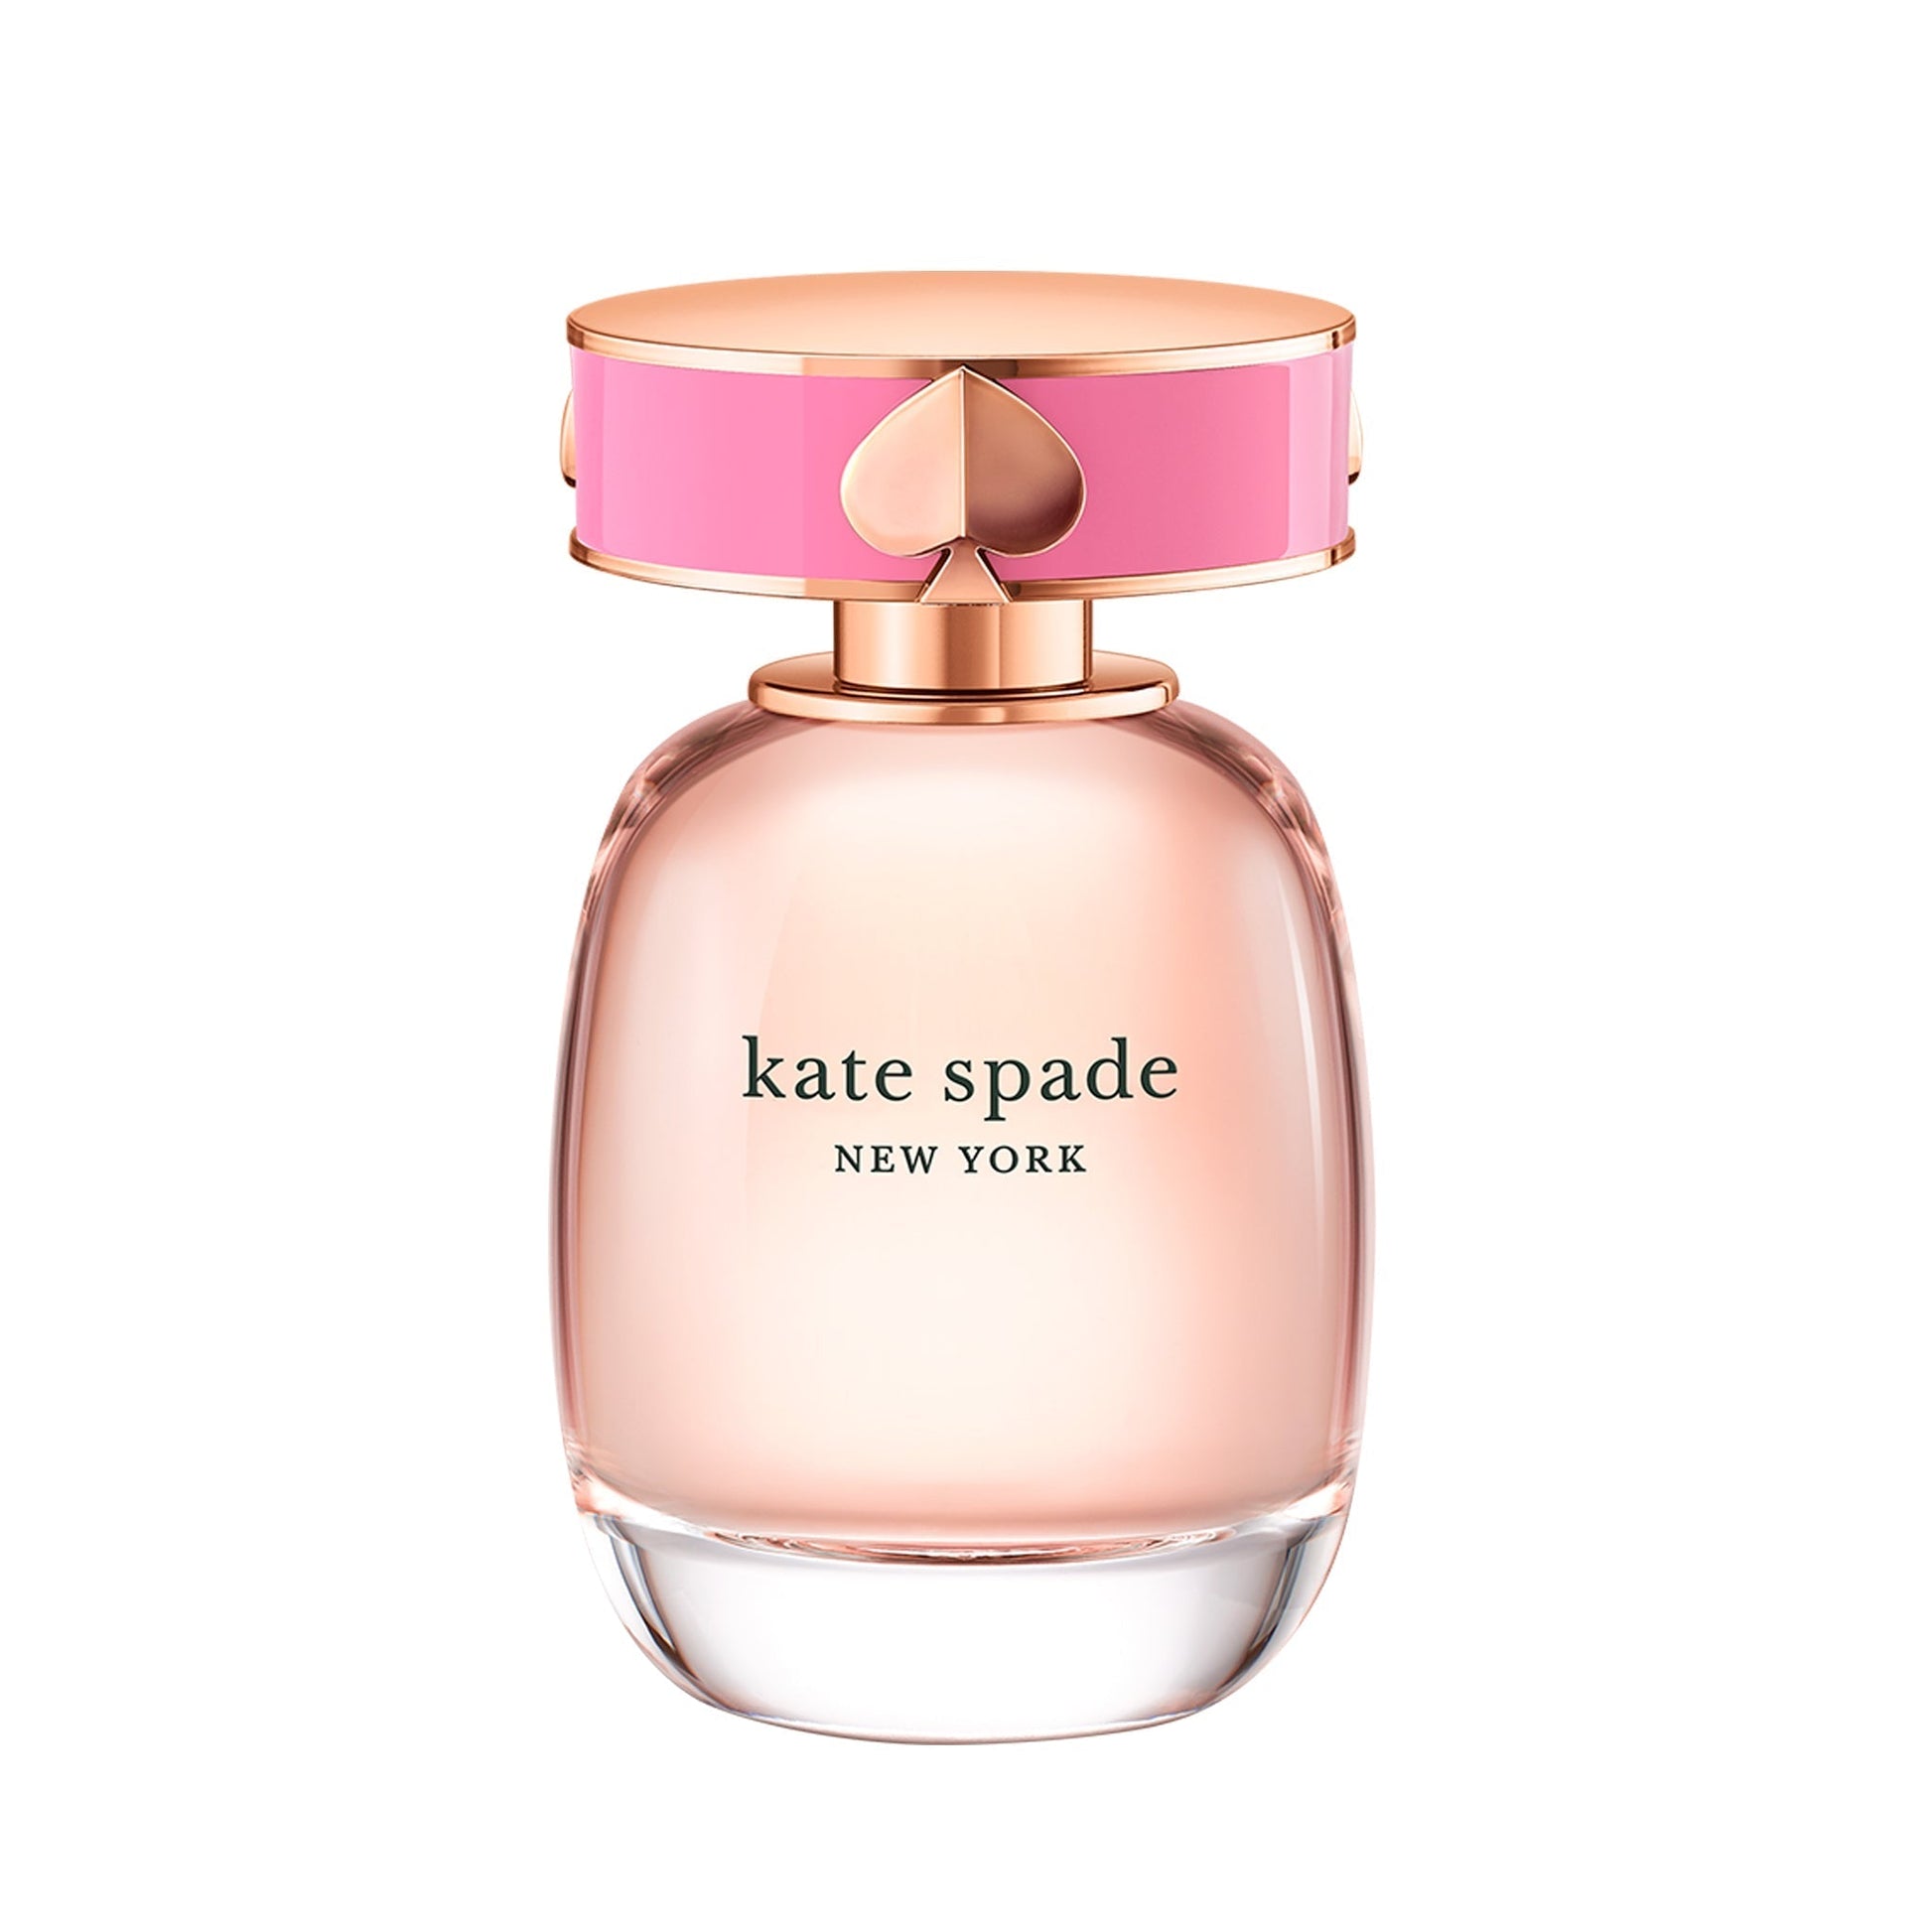 Kate Spade Eau De Parfum 60 ML on a white background